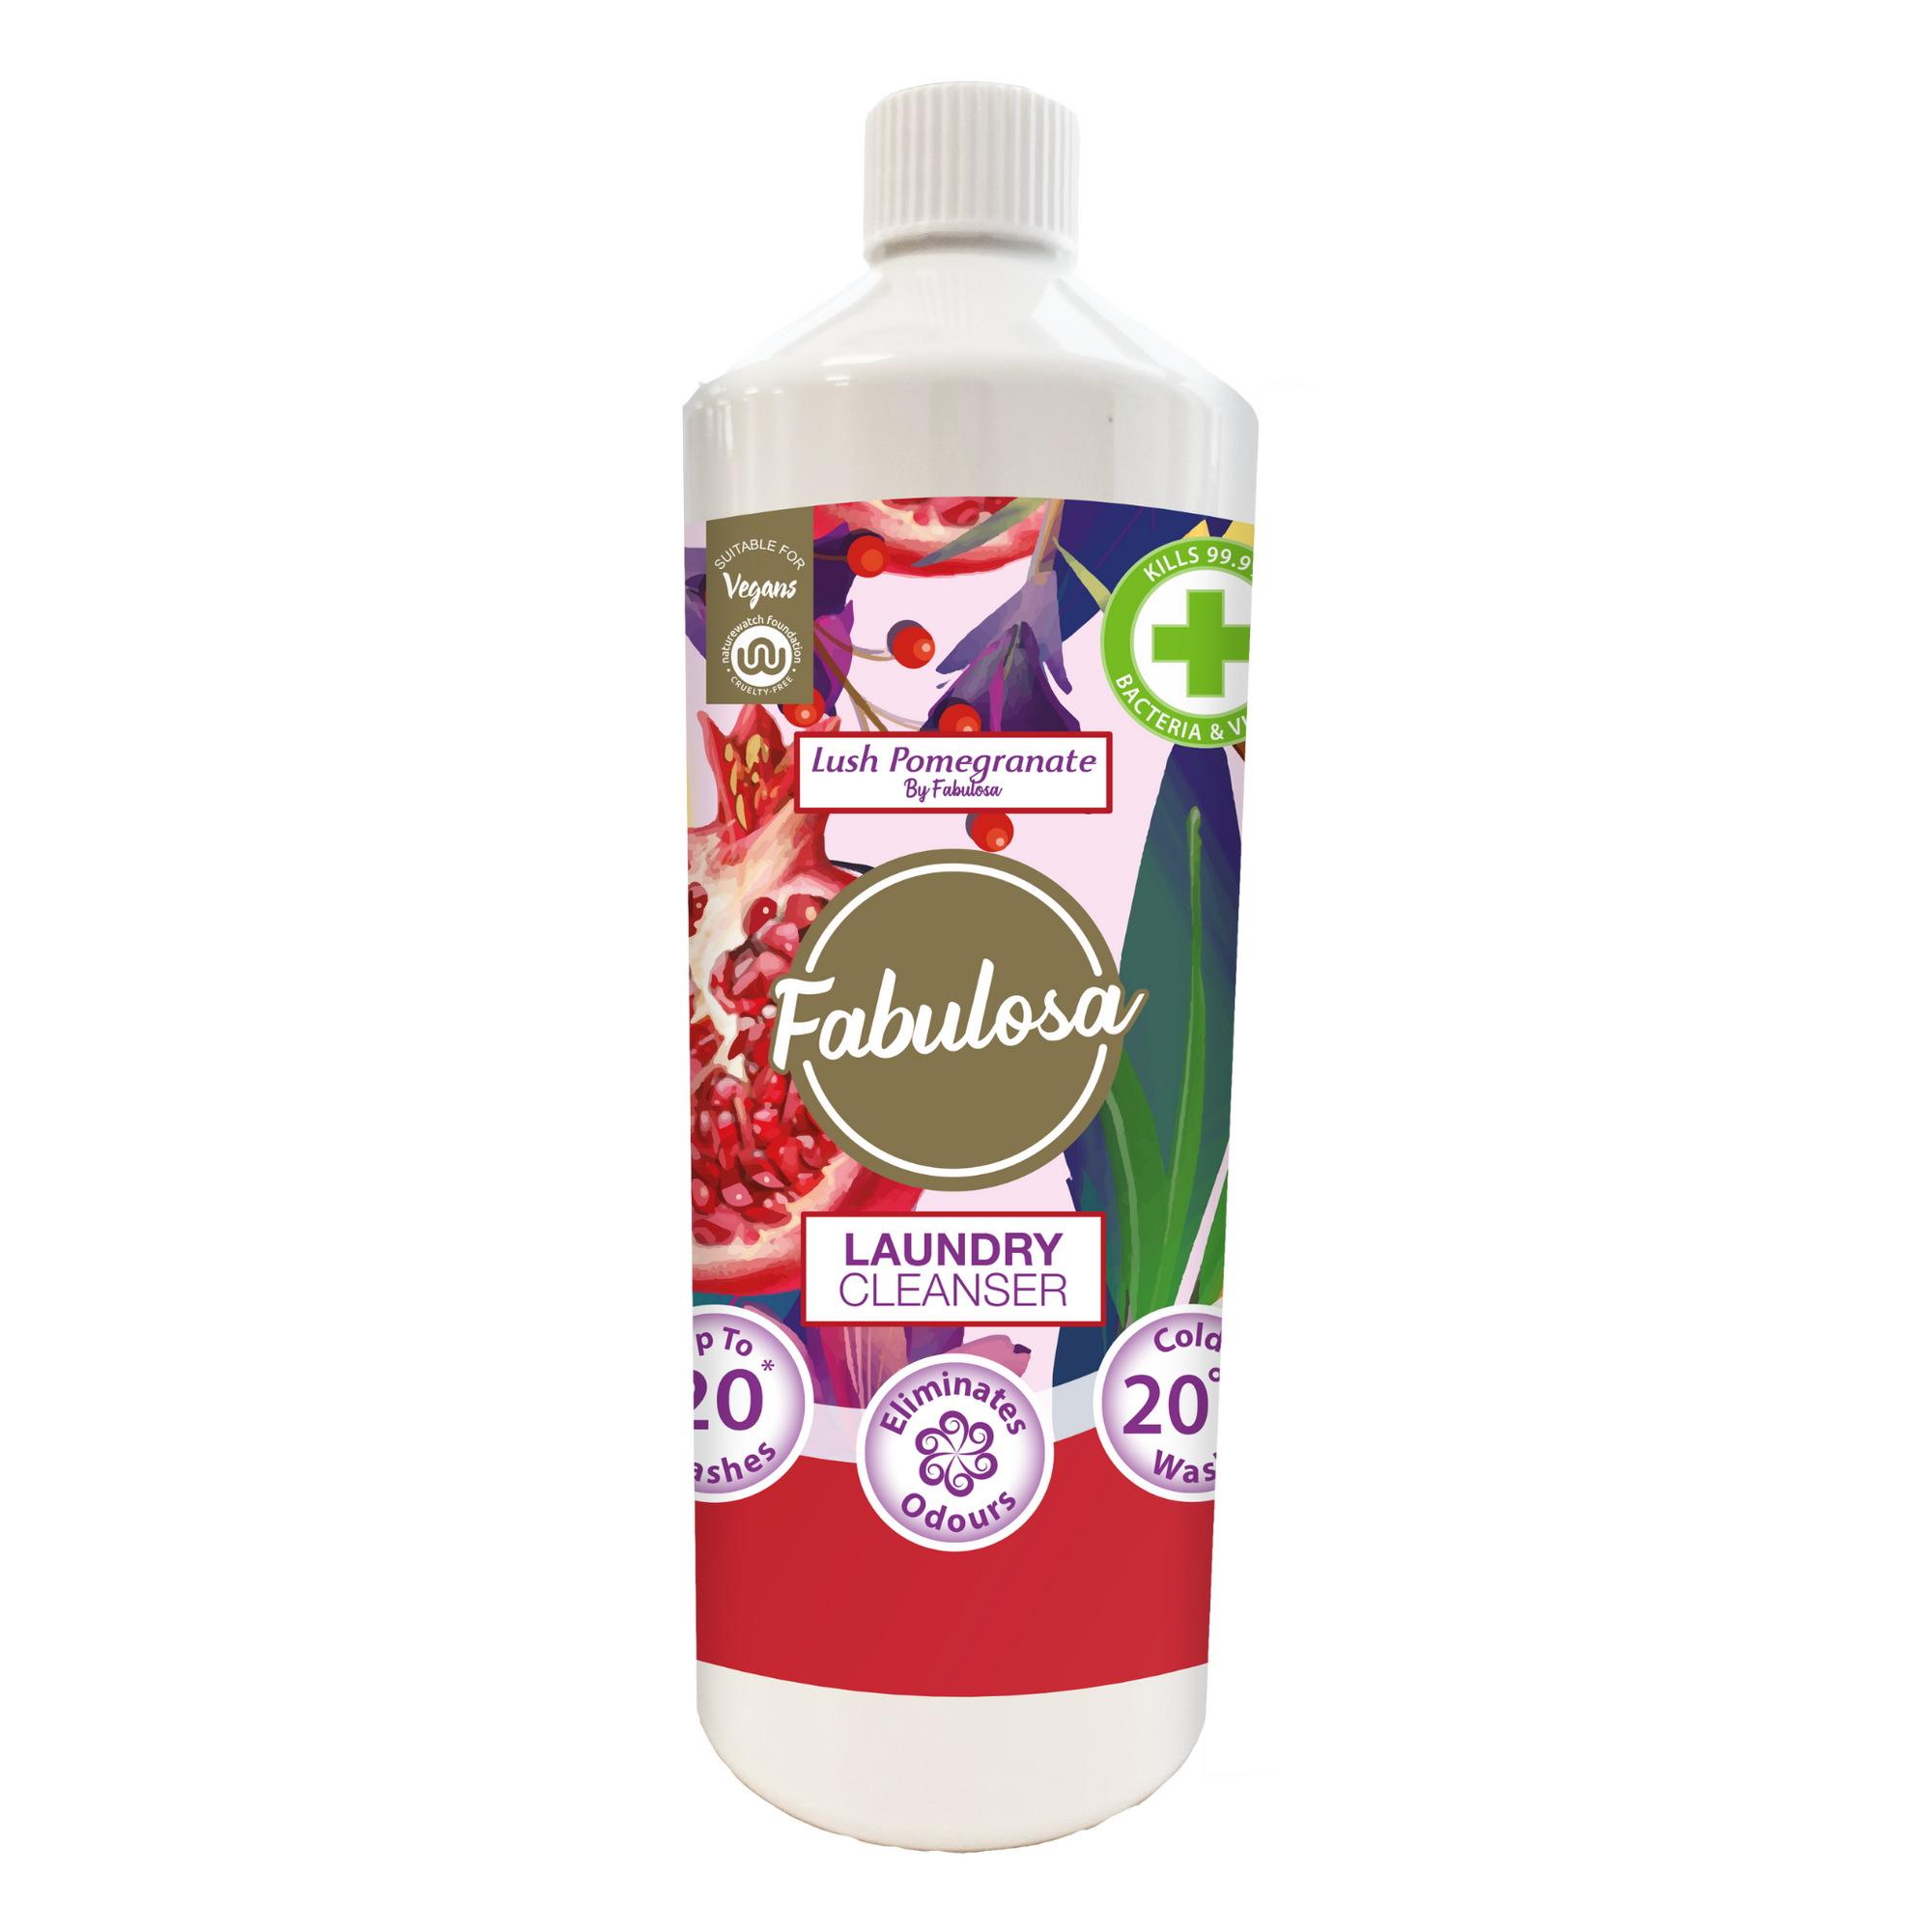 Fabulosa Laundry Cleanser - Lush Pomegranate (1L)